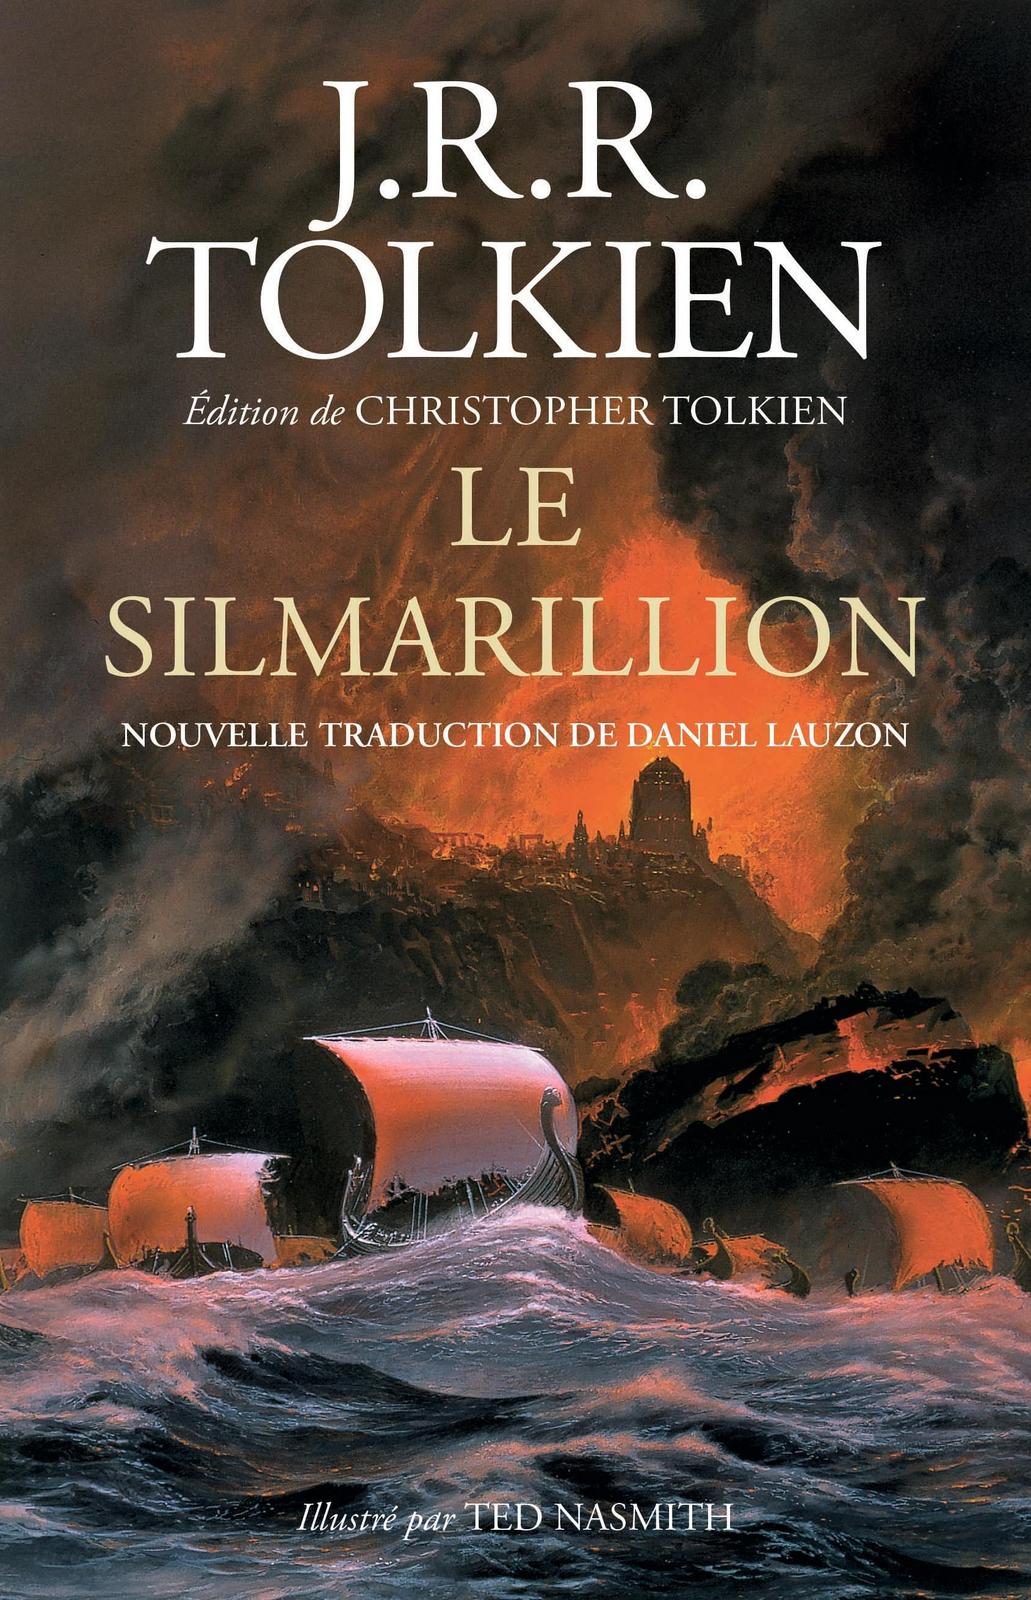 J.R.R. Tolkien: Le Silmarillion (French language, 2021, Christian Bourgois)